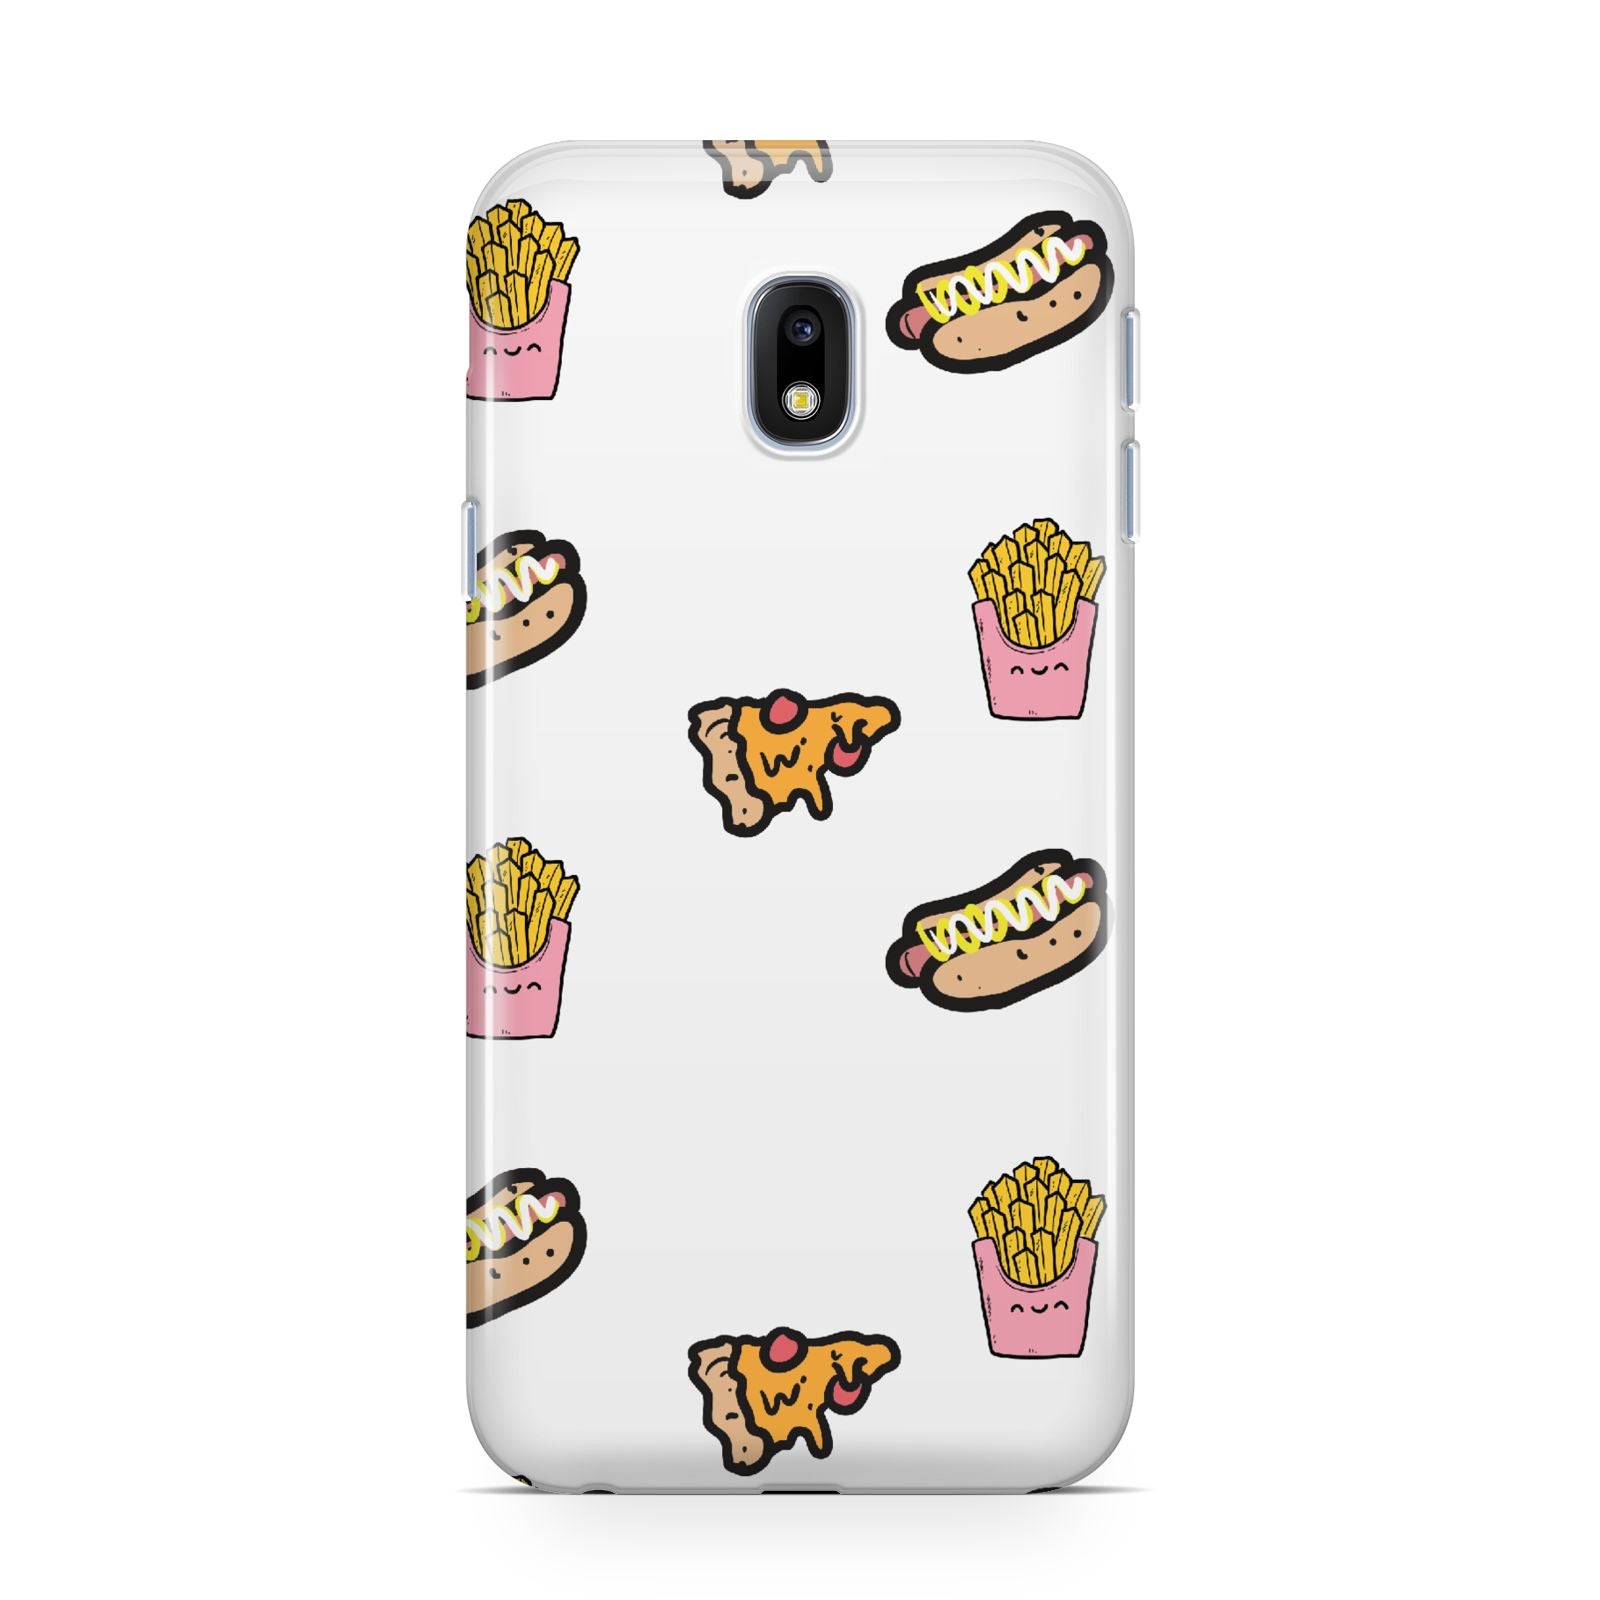 Fries Pizza Hot Dog Samsung Galaxy J3 2017 Case